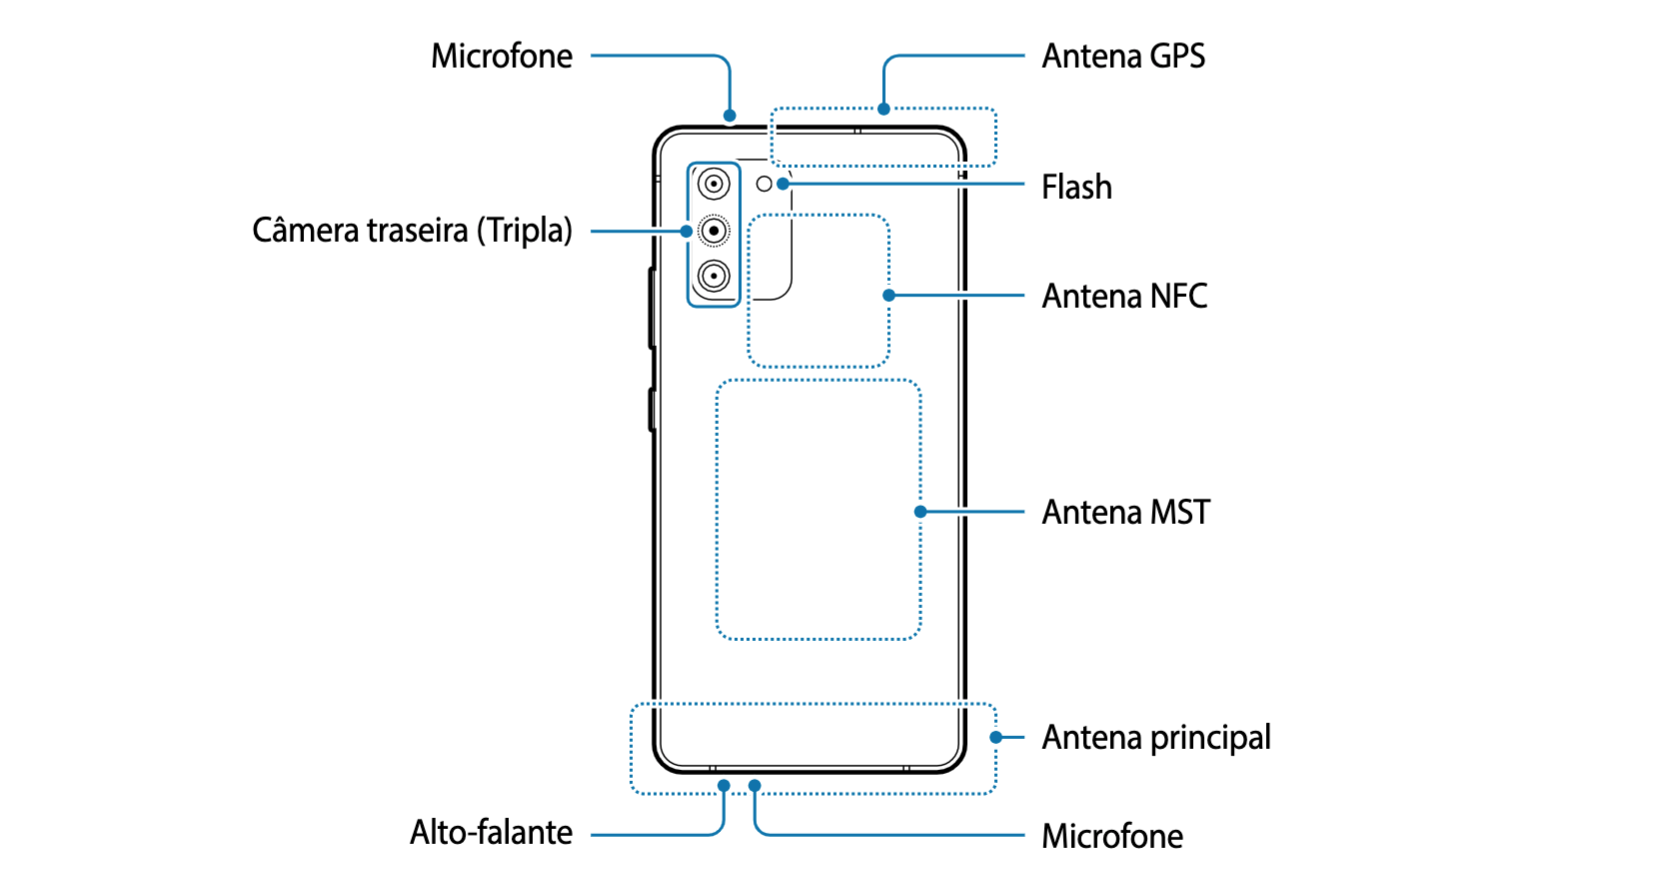 Galaxy S10 Lite user manual reveals some design hints - SamMobile